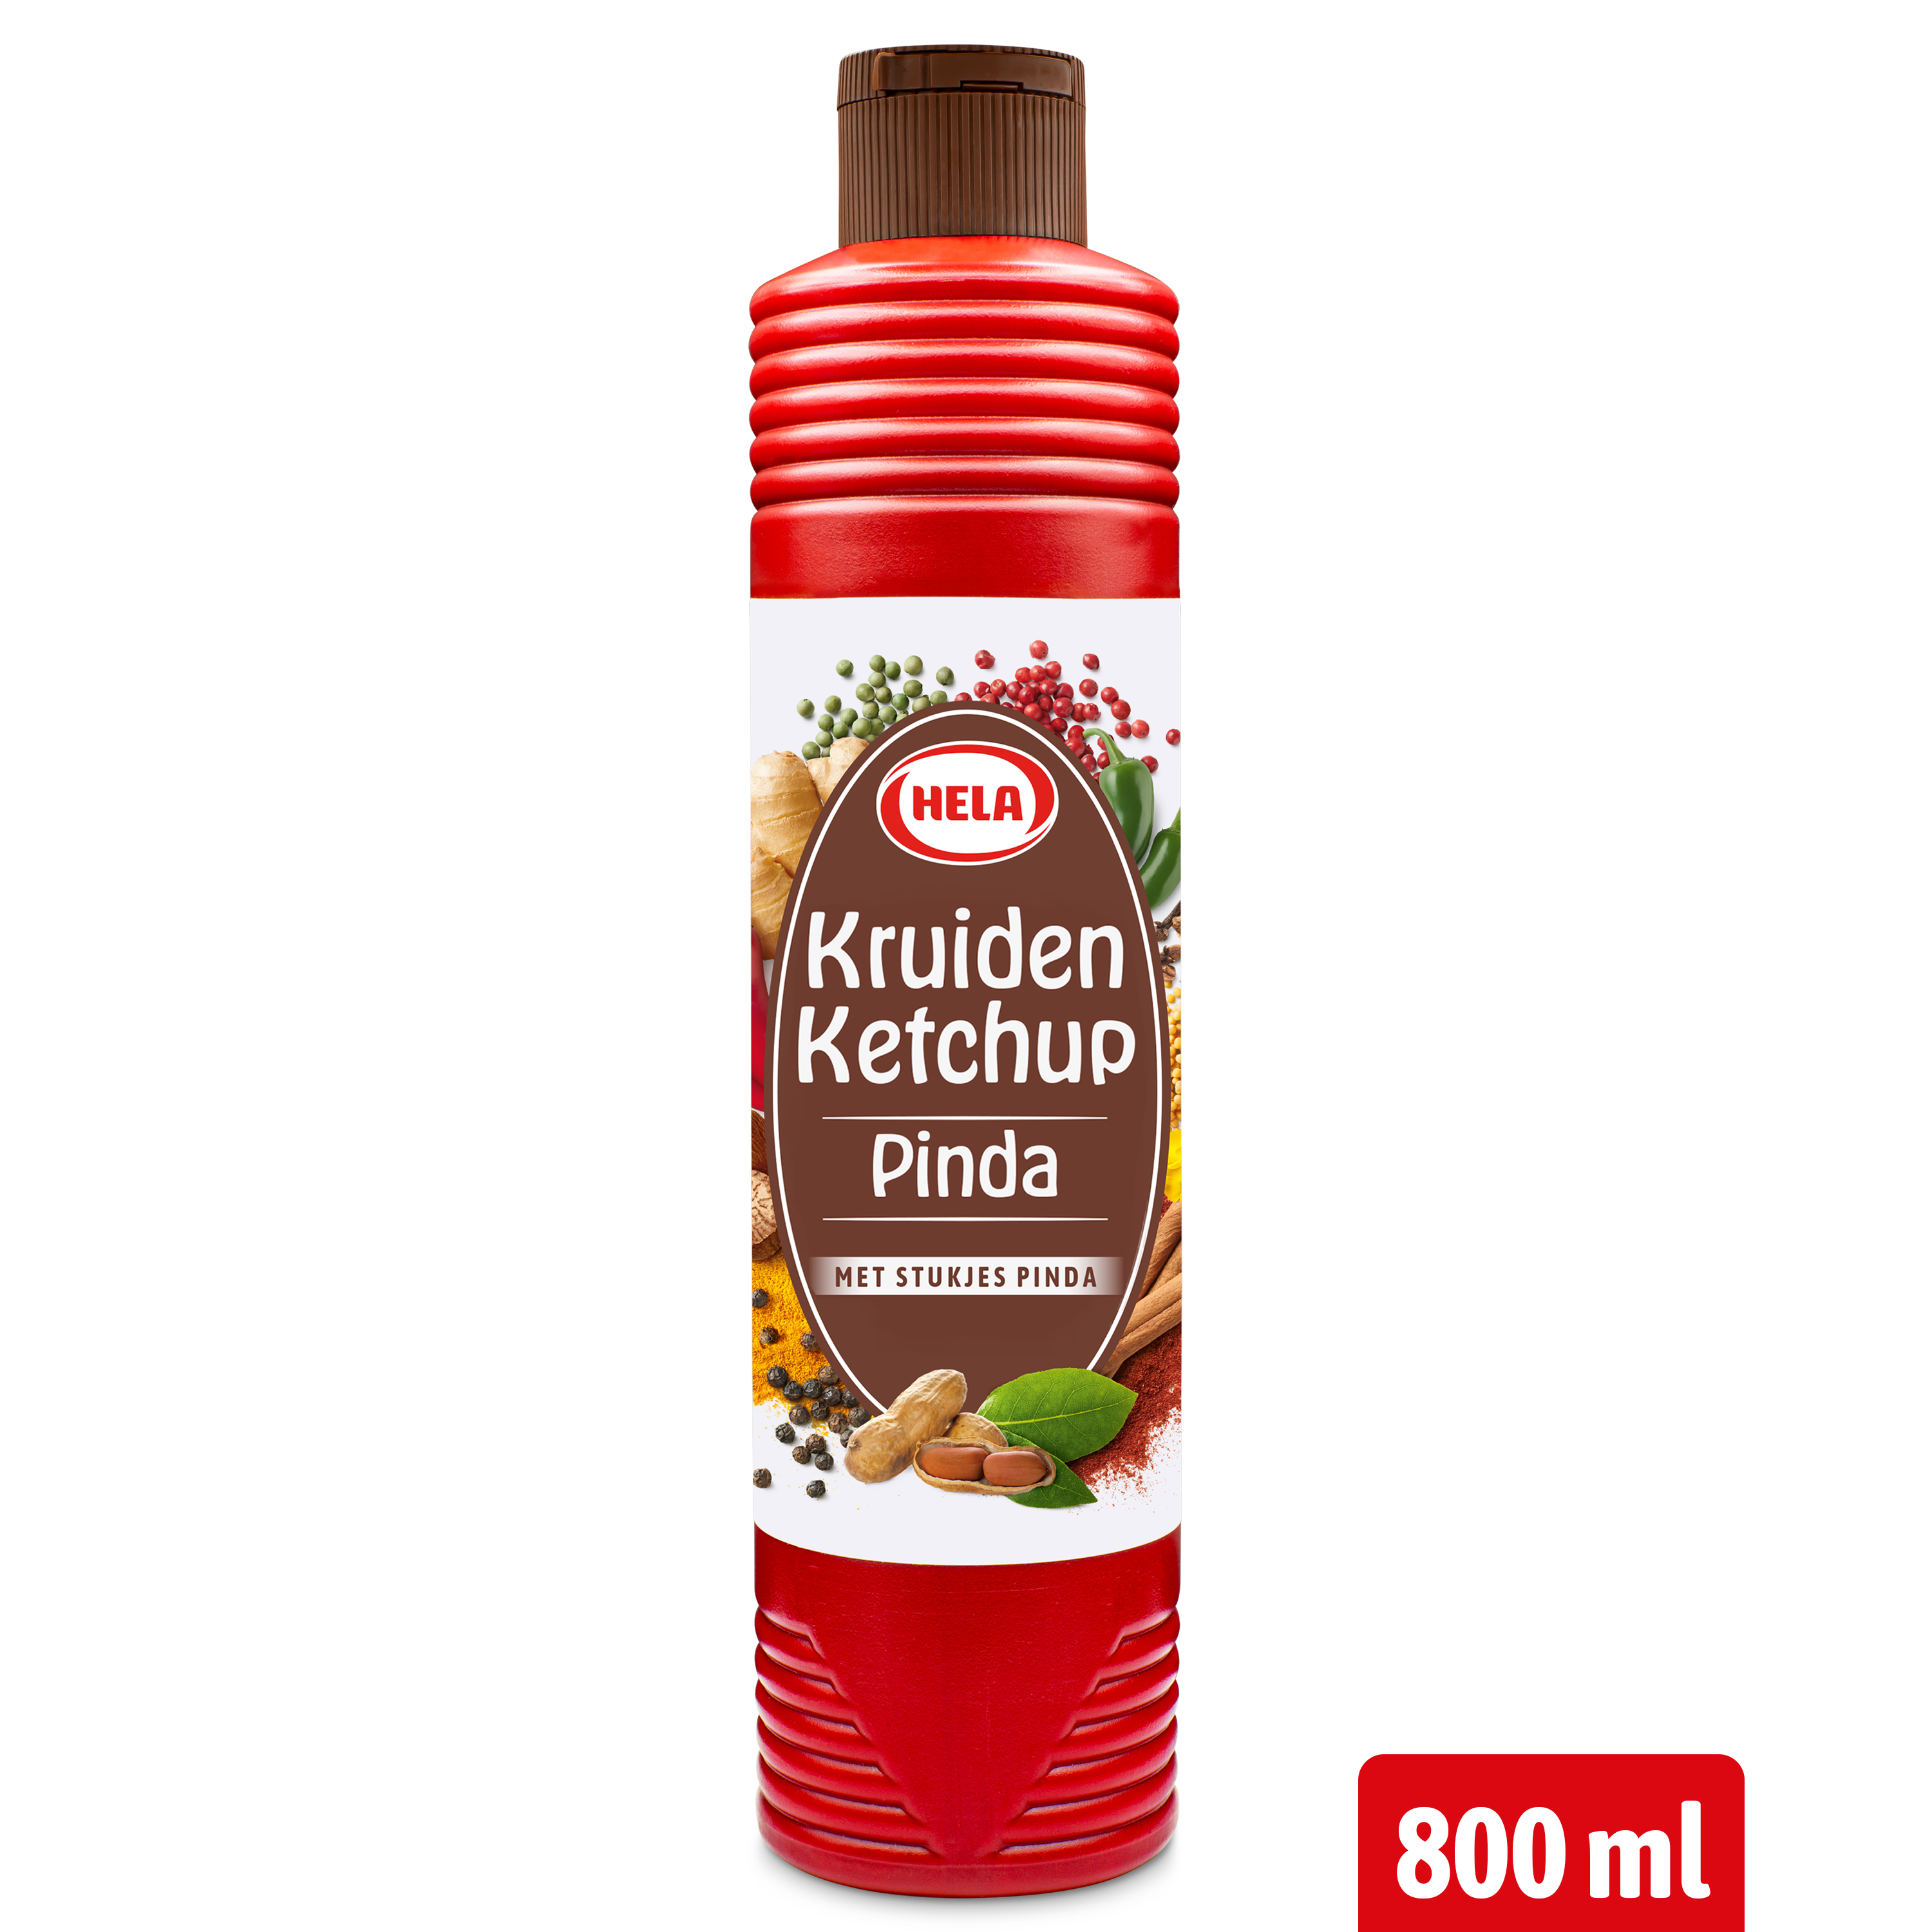 hela-kruiden-ketchup-pinda-12×800-ml.png